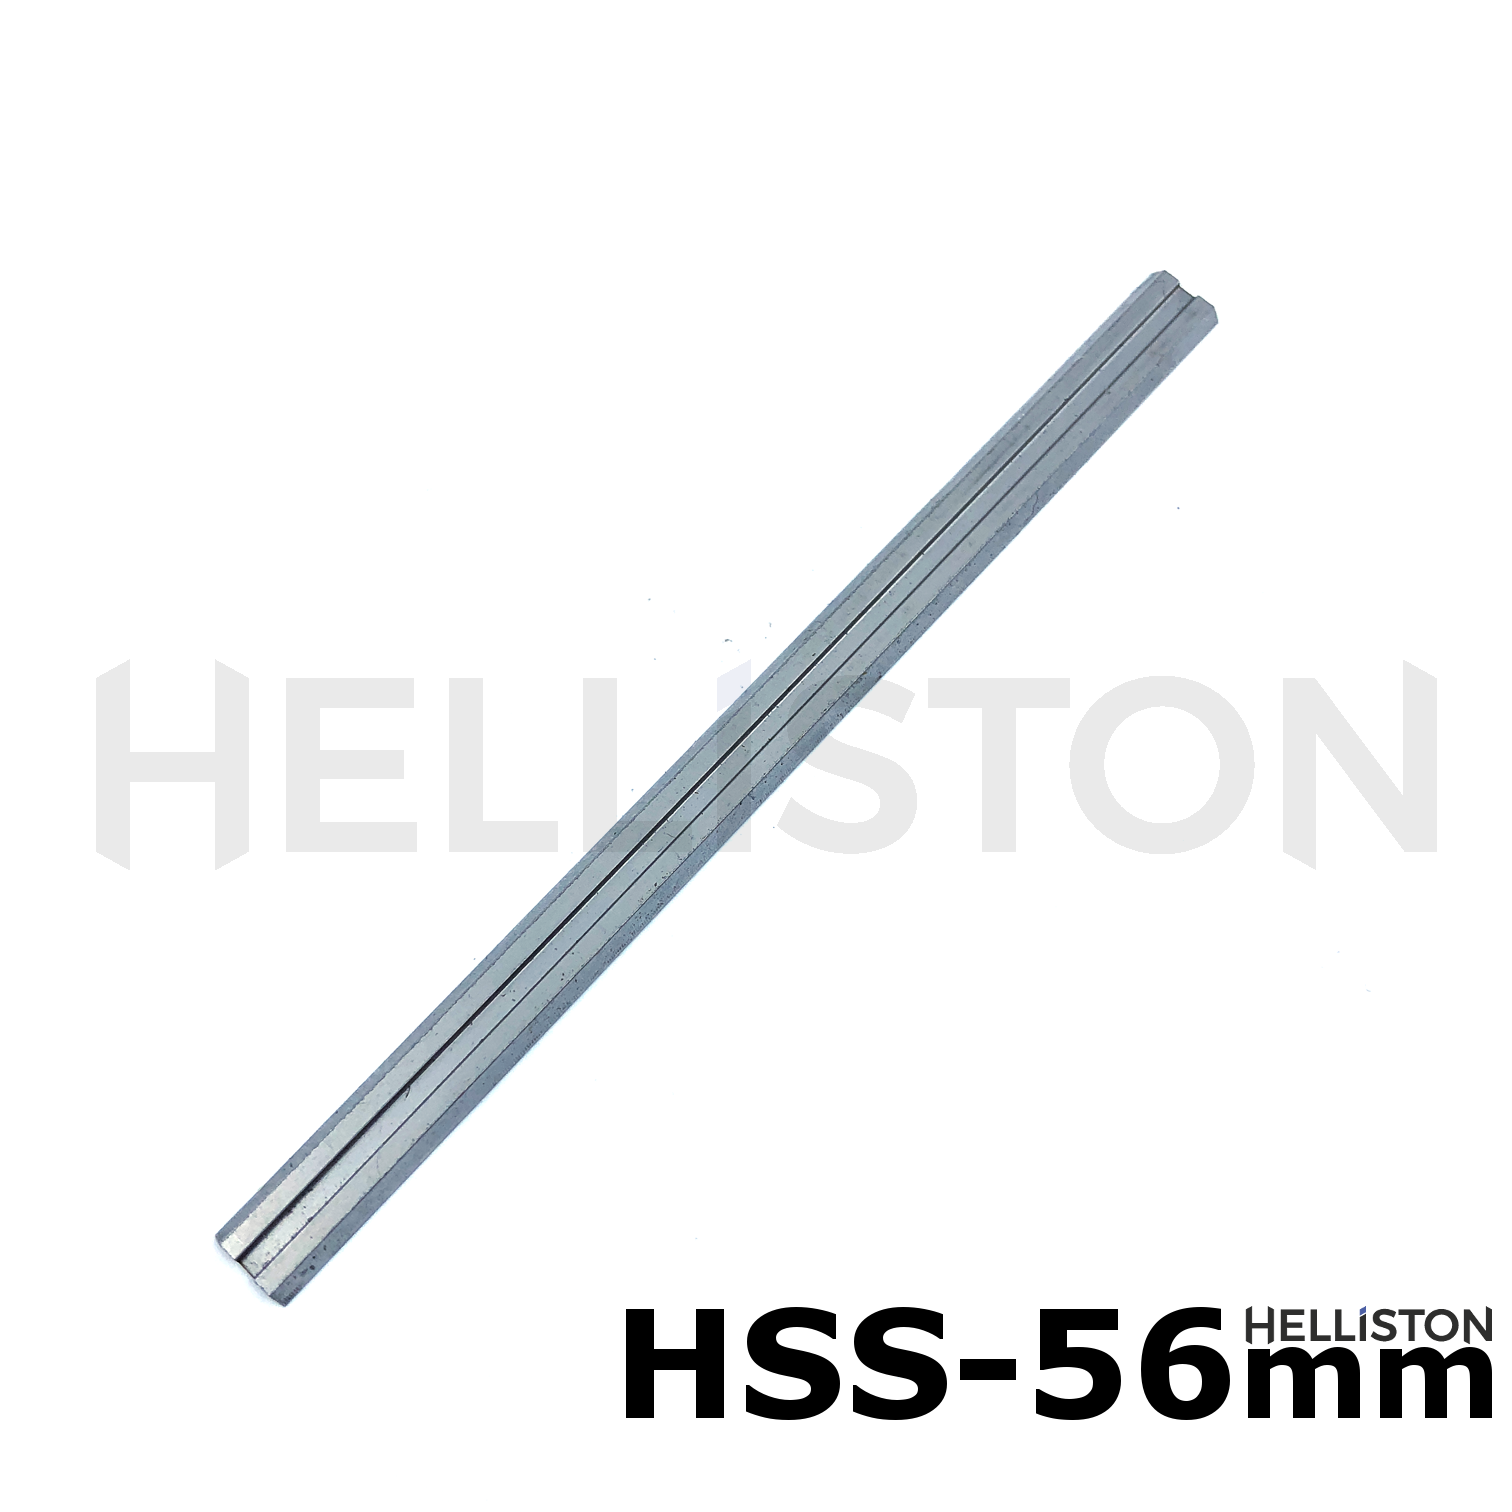 HSS Planer Blades, Reversible Knives 56 mm, High-speed-steel, double-sided blades for electrical hand planersBosch GHO 12V-20, Adler BH 556, Hoffmann BH-556, Wegoma AP98 etc